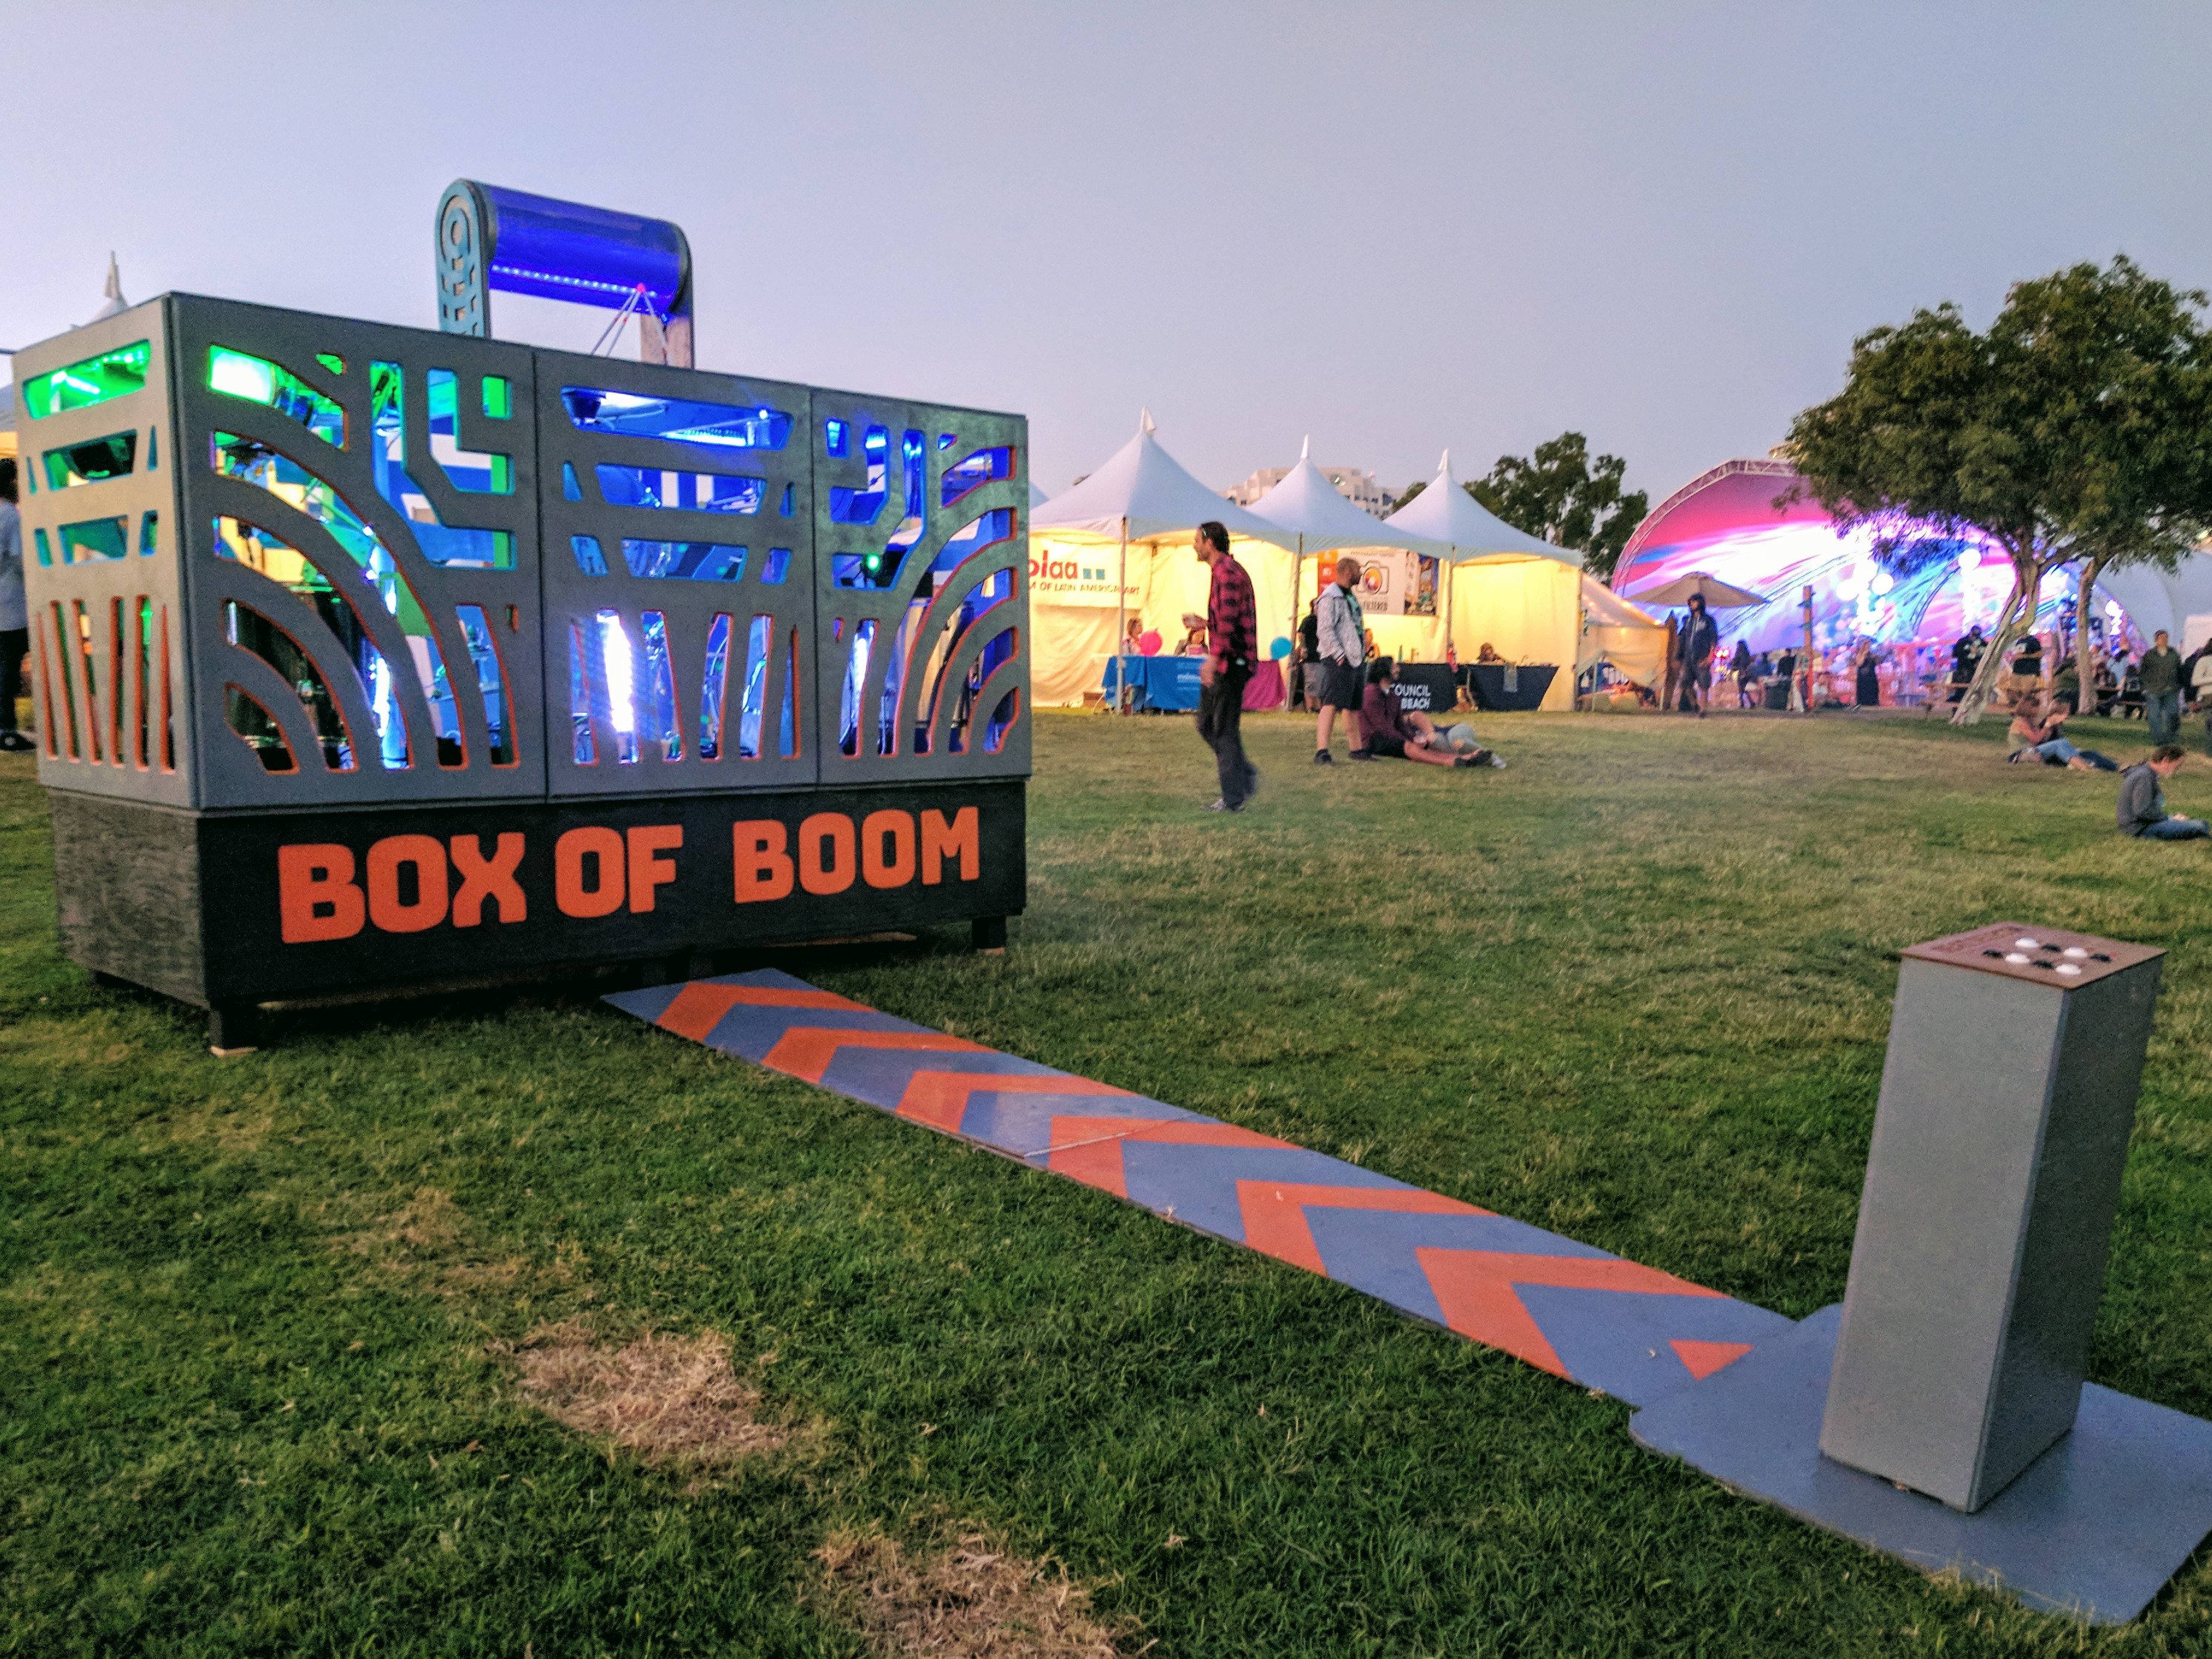 The Box of Boom